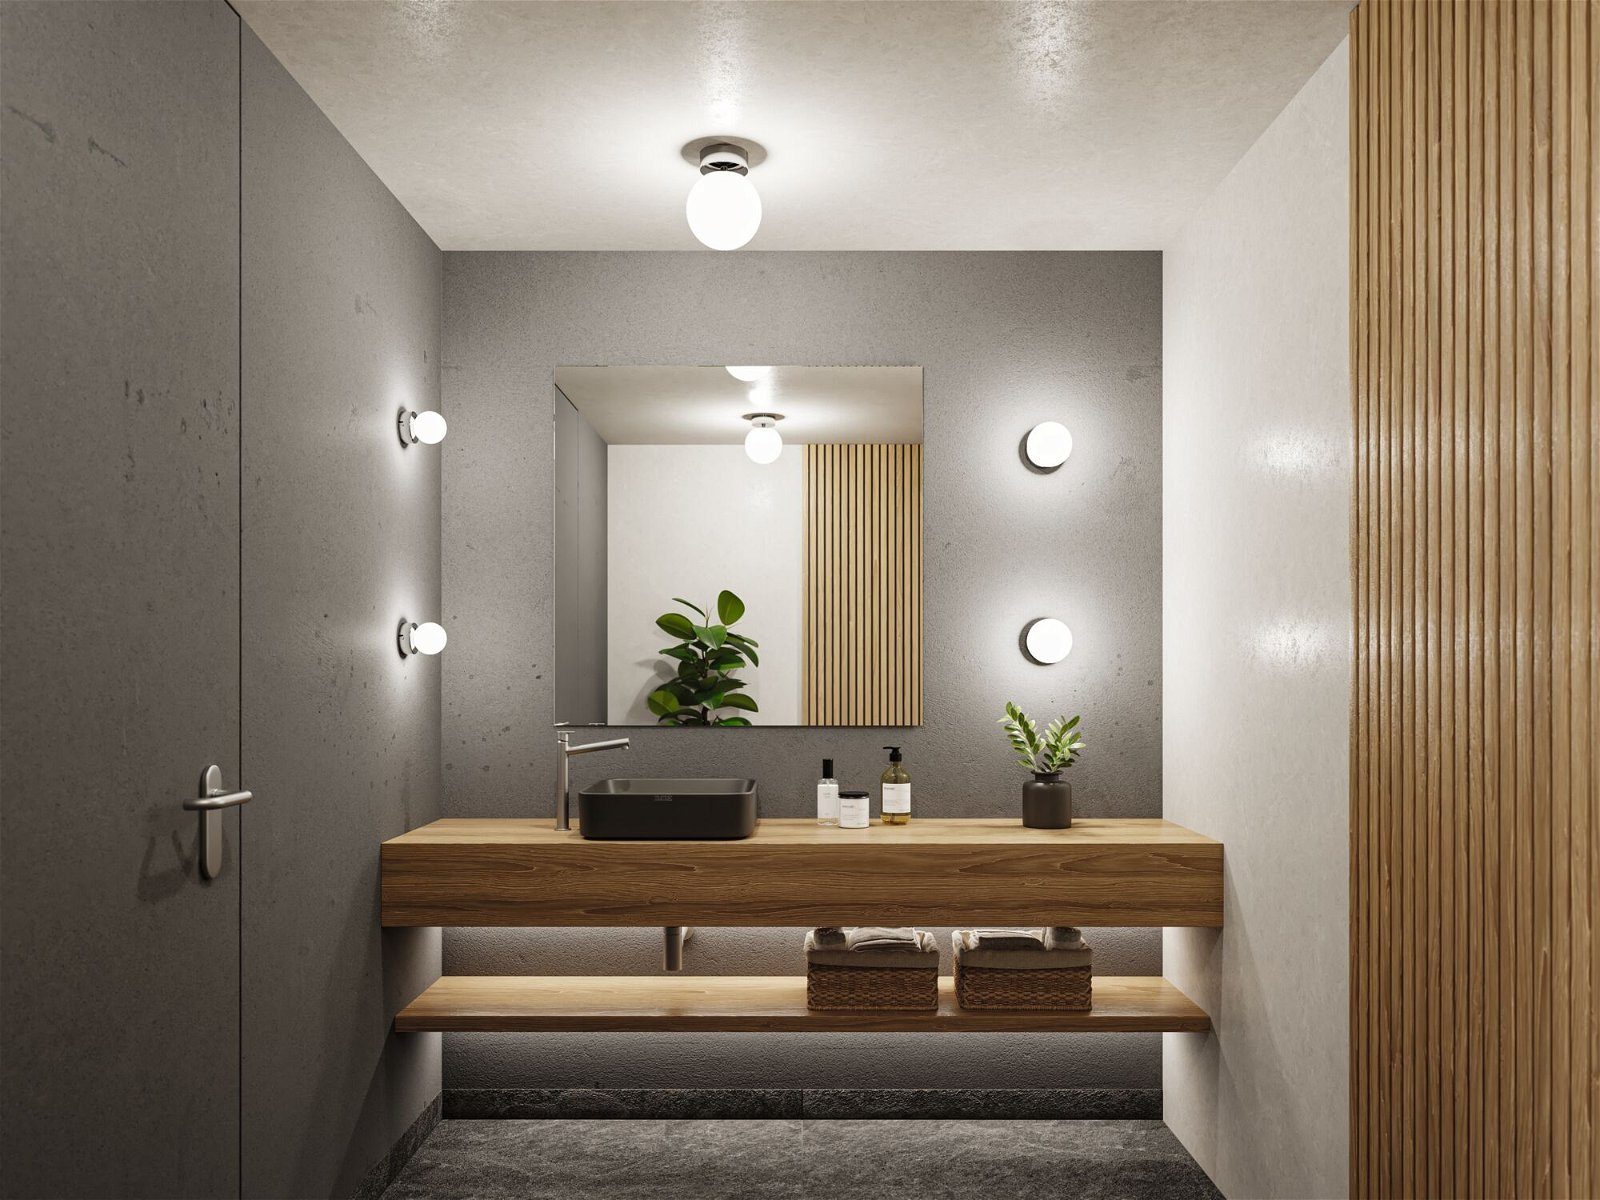 Satin/Chrom LED fest 3000K Selection Gove Warmweiß IP44 Bathroom Deckenleuchte 9W integriert, Paulmann Glas/Metall, LED